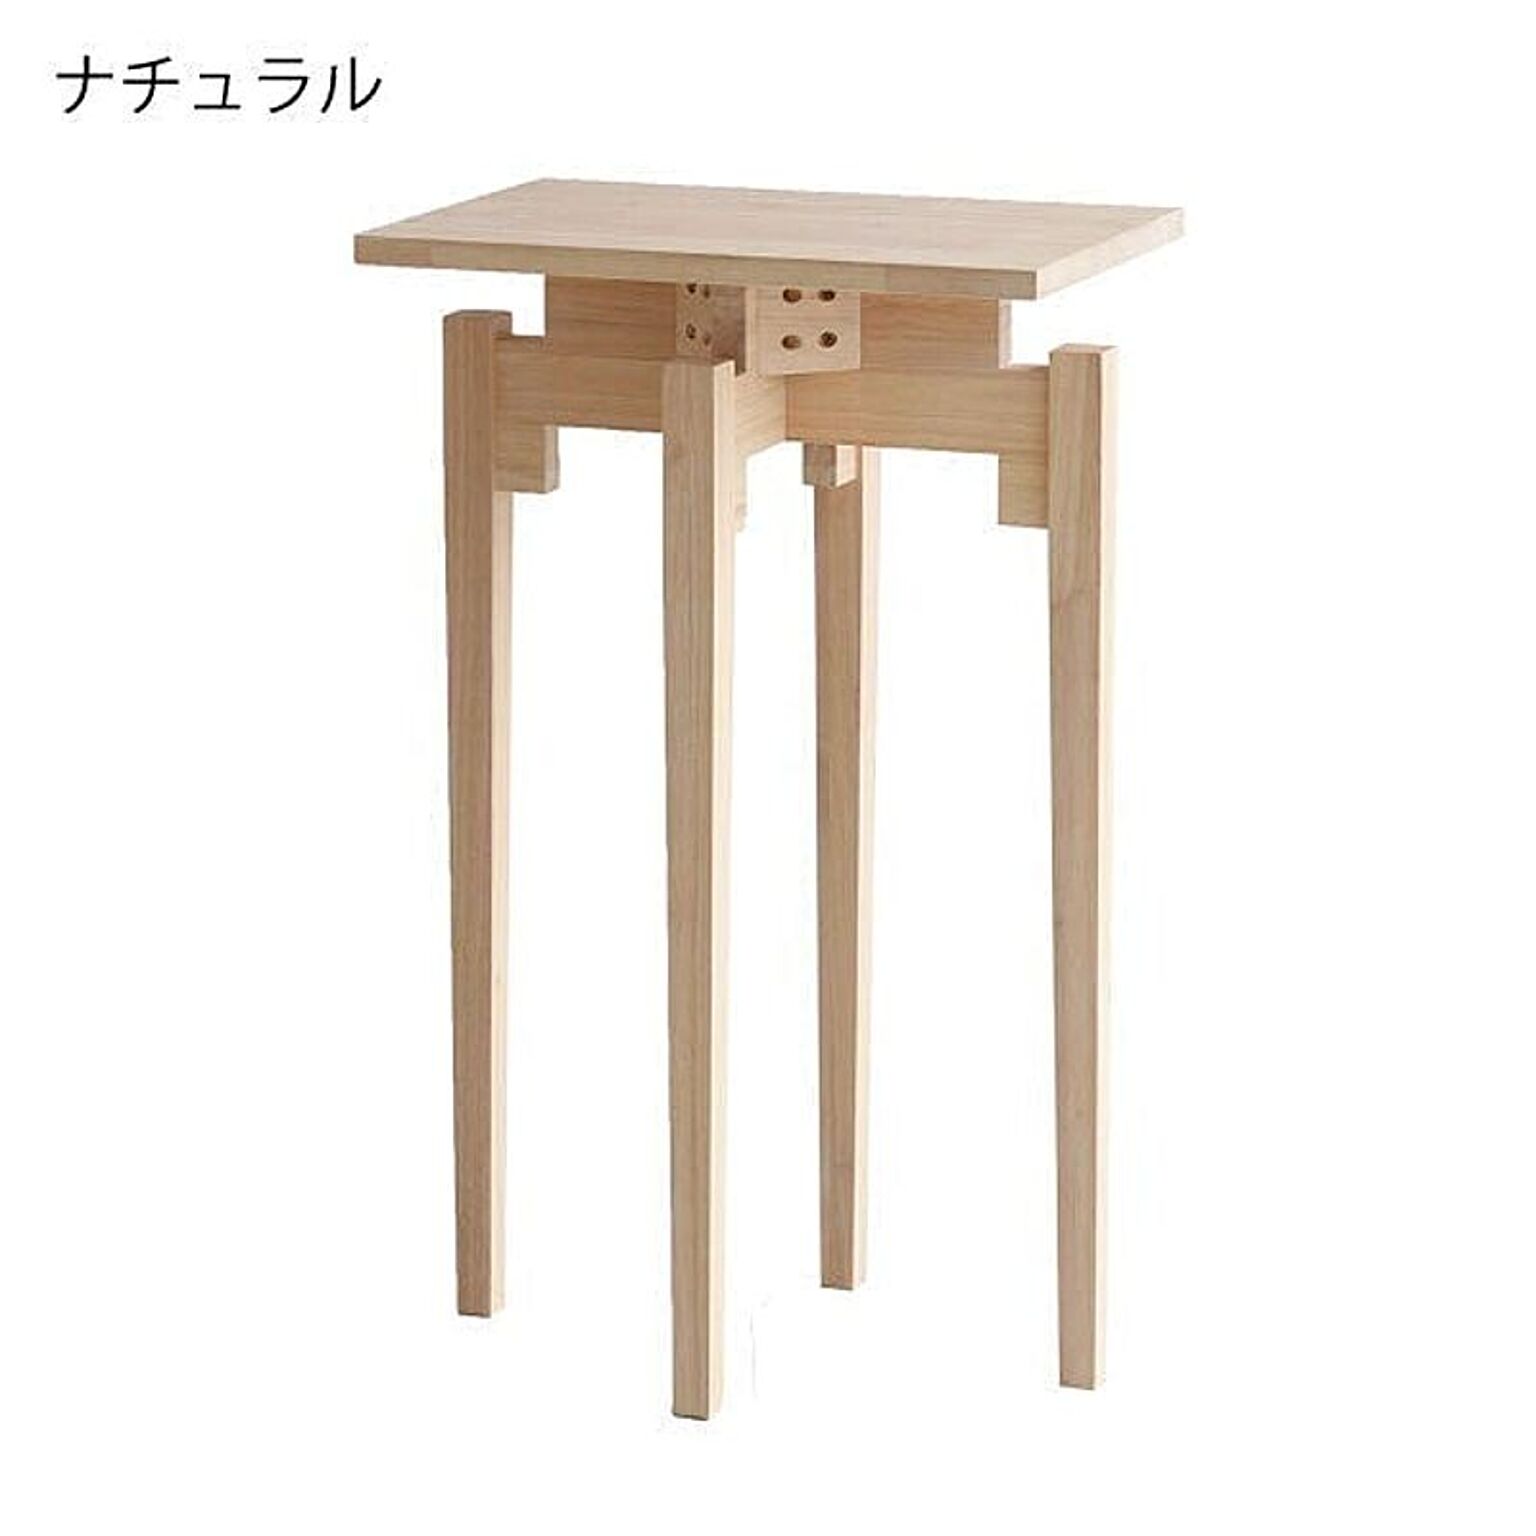 Console Table　ILT-3243　コンソールテーブル